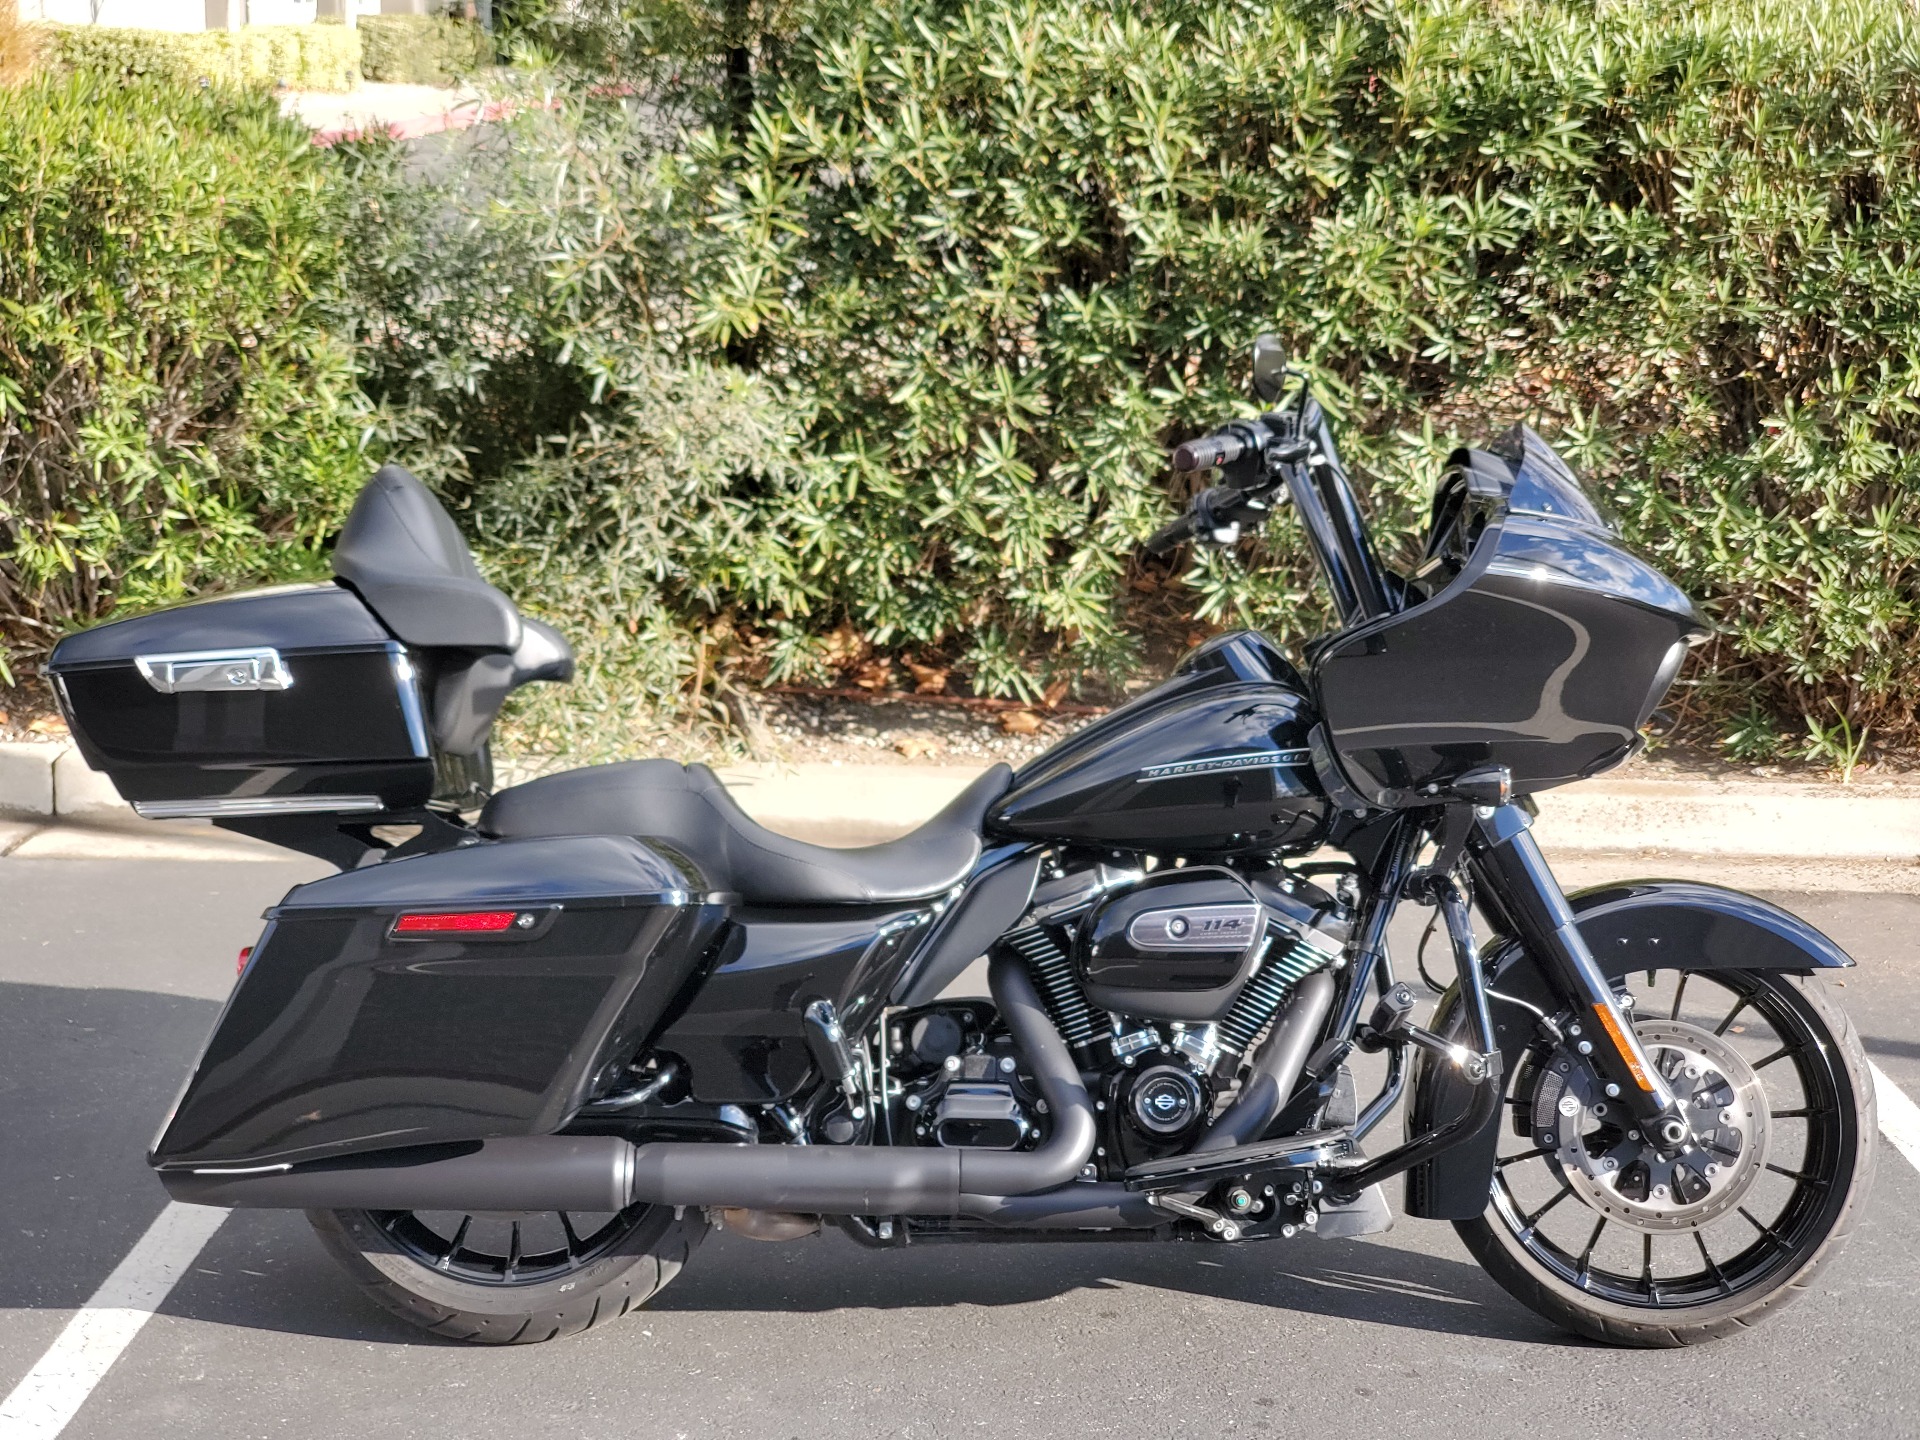 2019 Harley-Davidson Road Glide® Special in Livermore, California - Photo 1